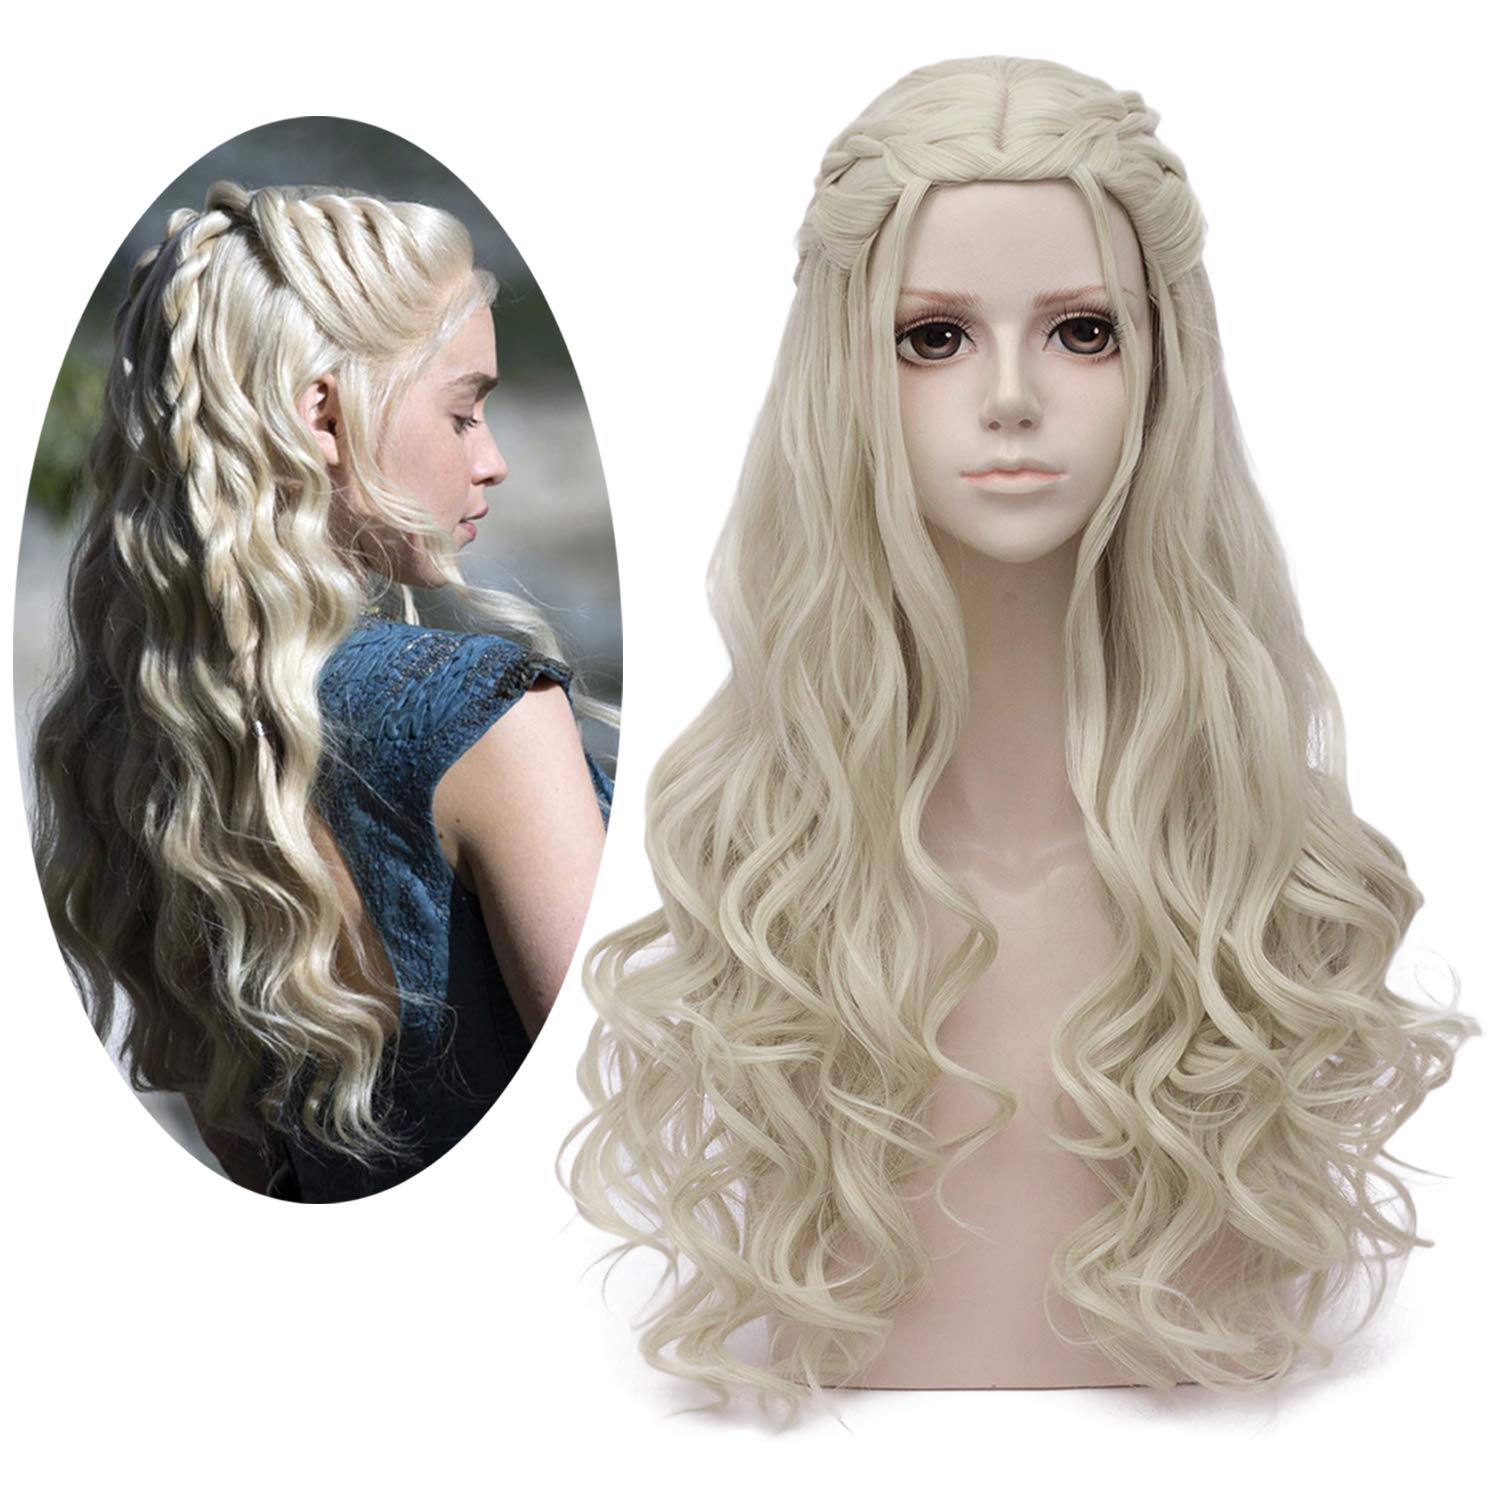 Price:$19.99    Mersi Daenerys Targaryen Wig Khaleesi Cosplay Wigs Long Blonde Braided Party Hair Wigs for Halloween (Blonde) S039G  Beauty